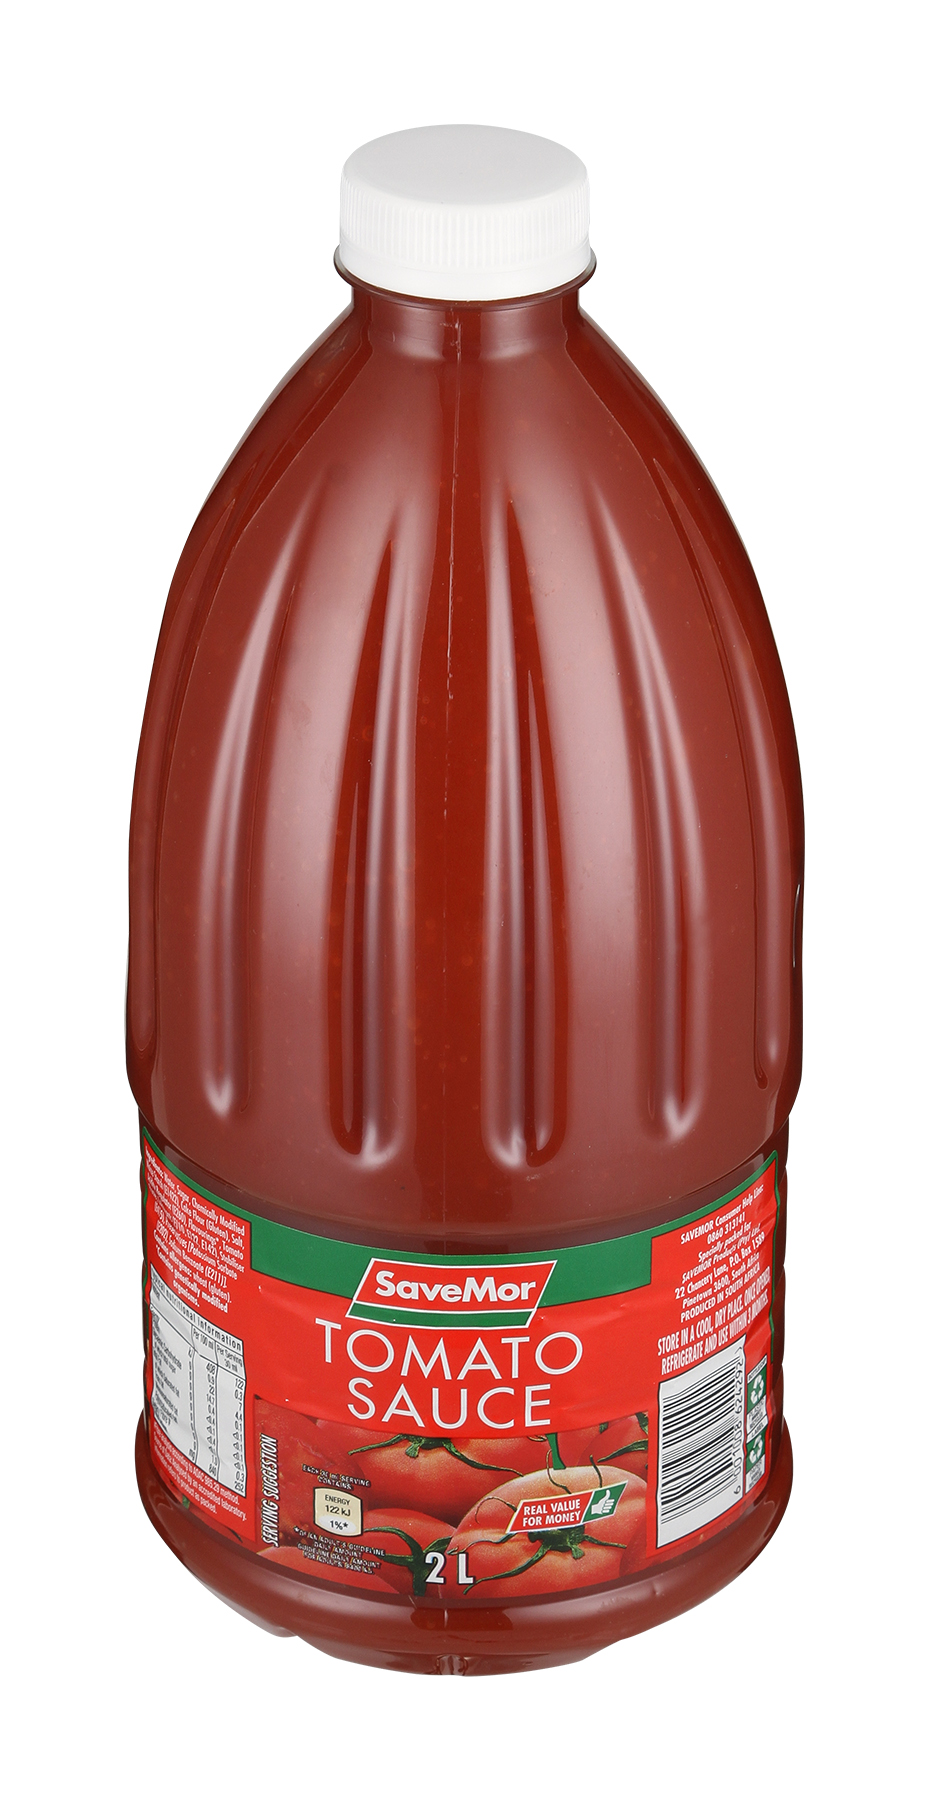 tomato sauce (savemor)